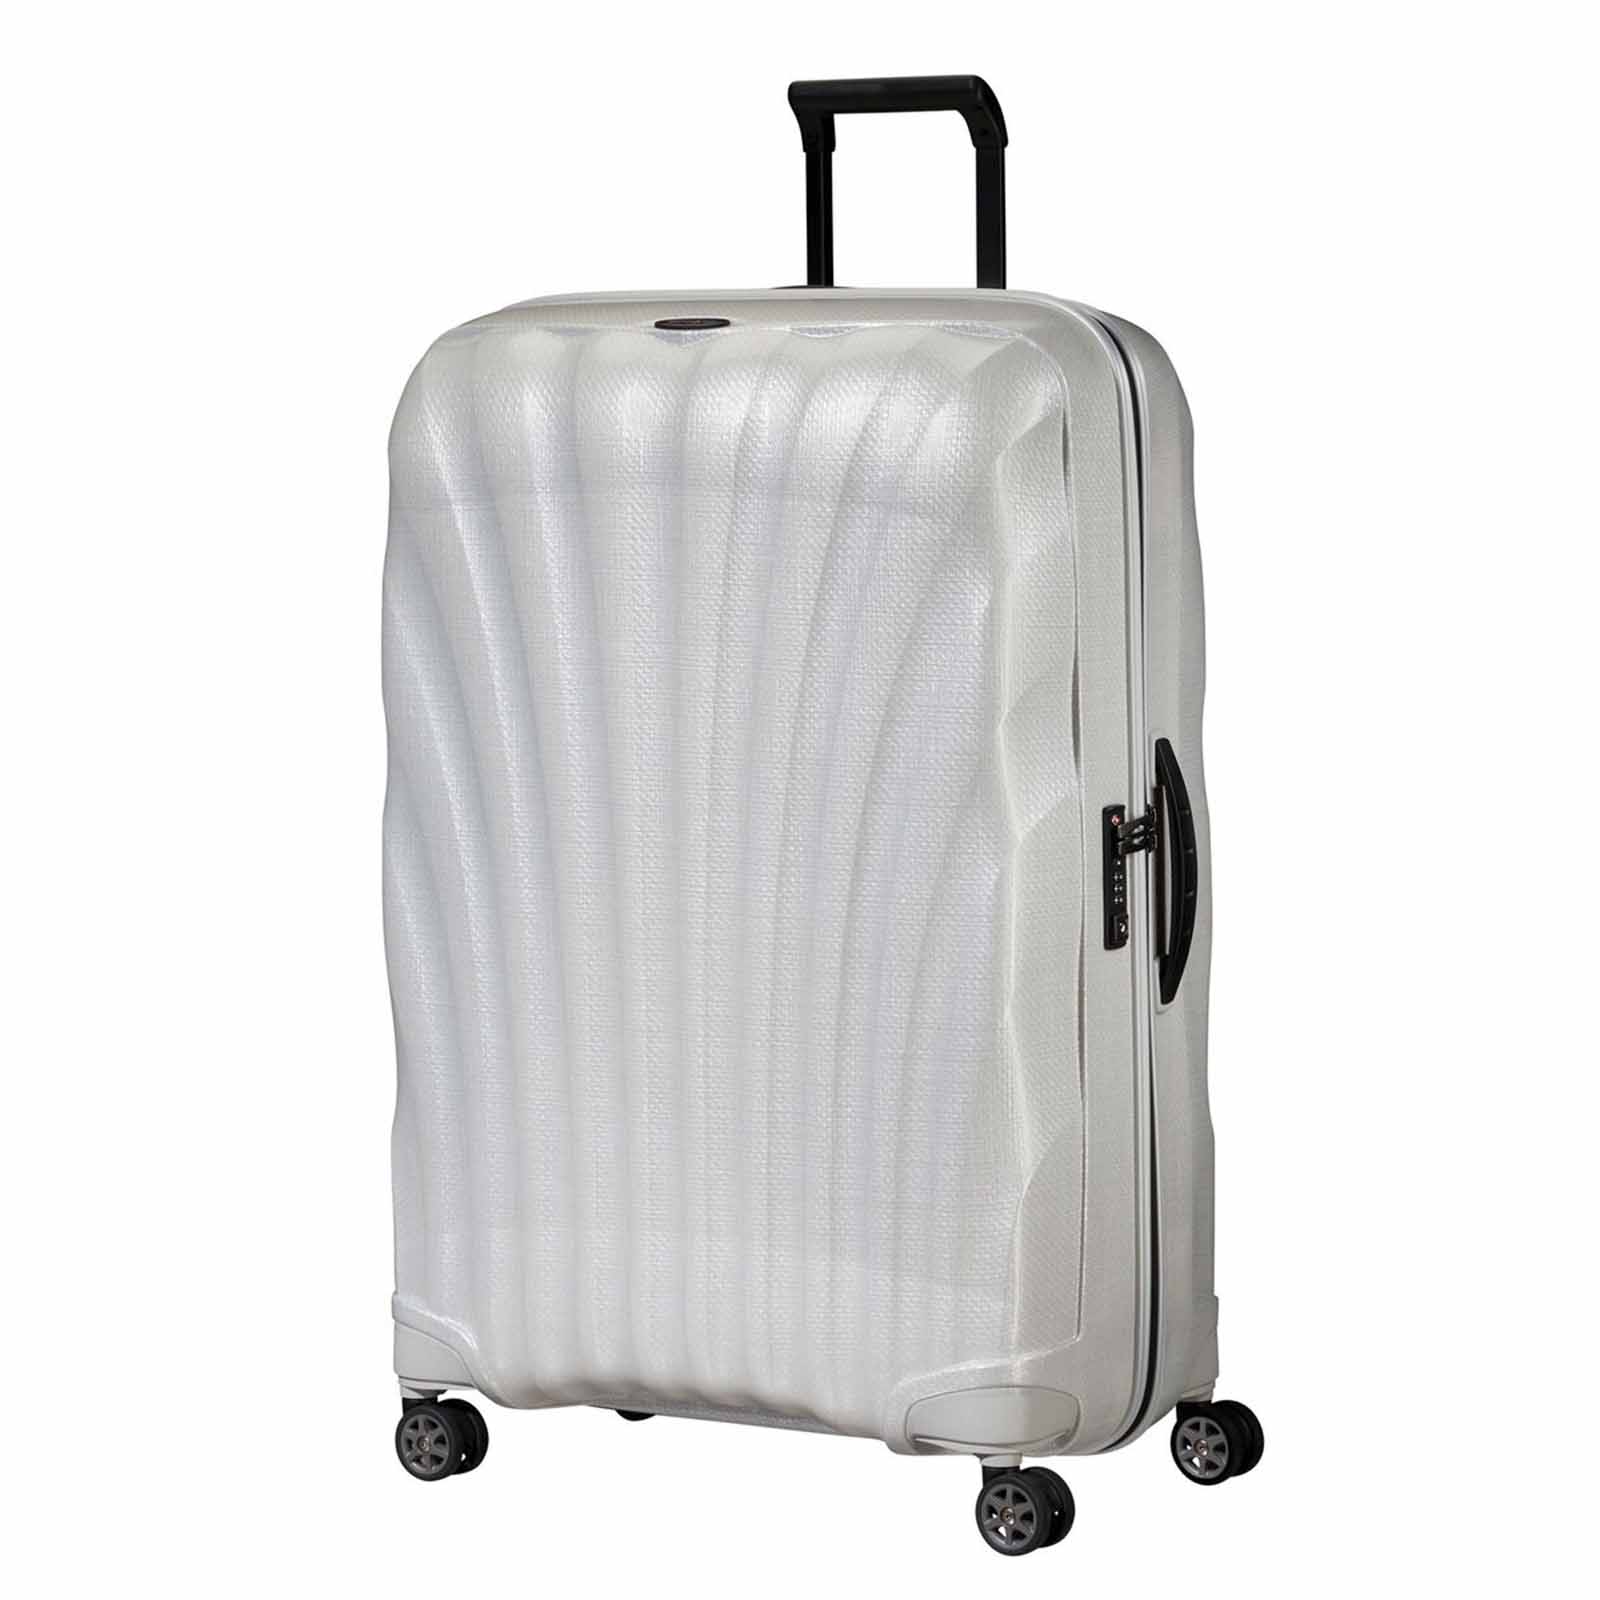 Samsonite-C-Lite-81cm-Suitcase-Midnight-Off-White-Front-Angle